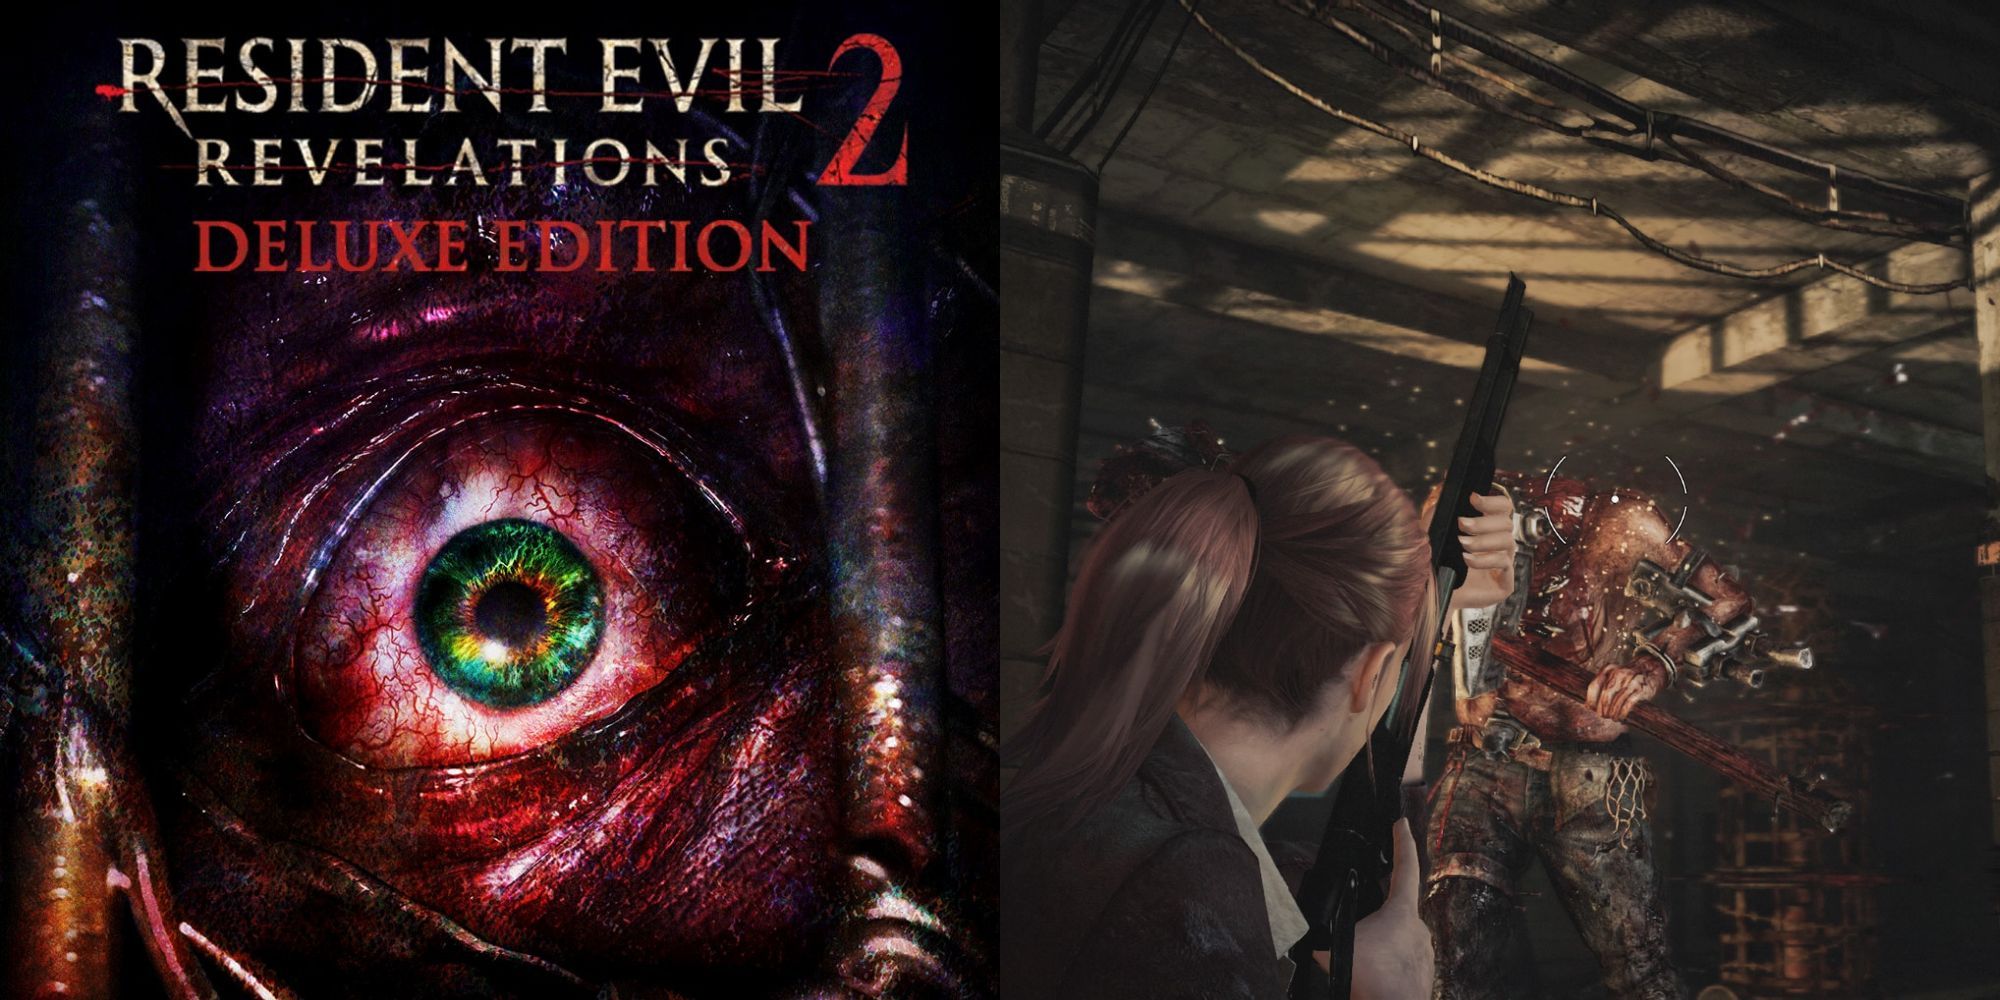 Resident evil revelations 2 cover art eye with in-game image of monster shot with shotgun